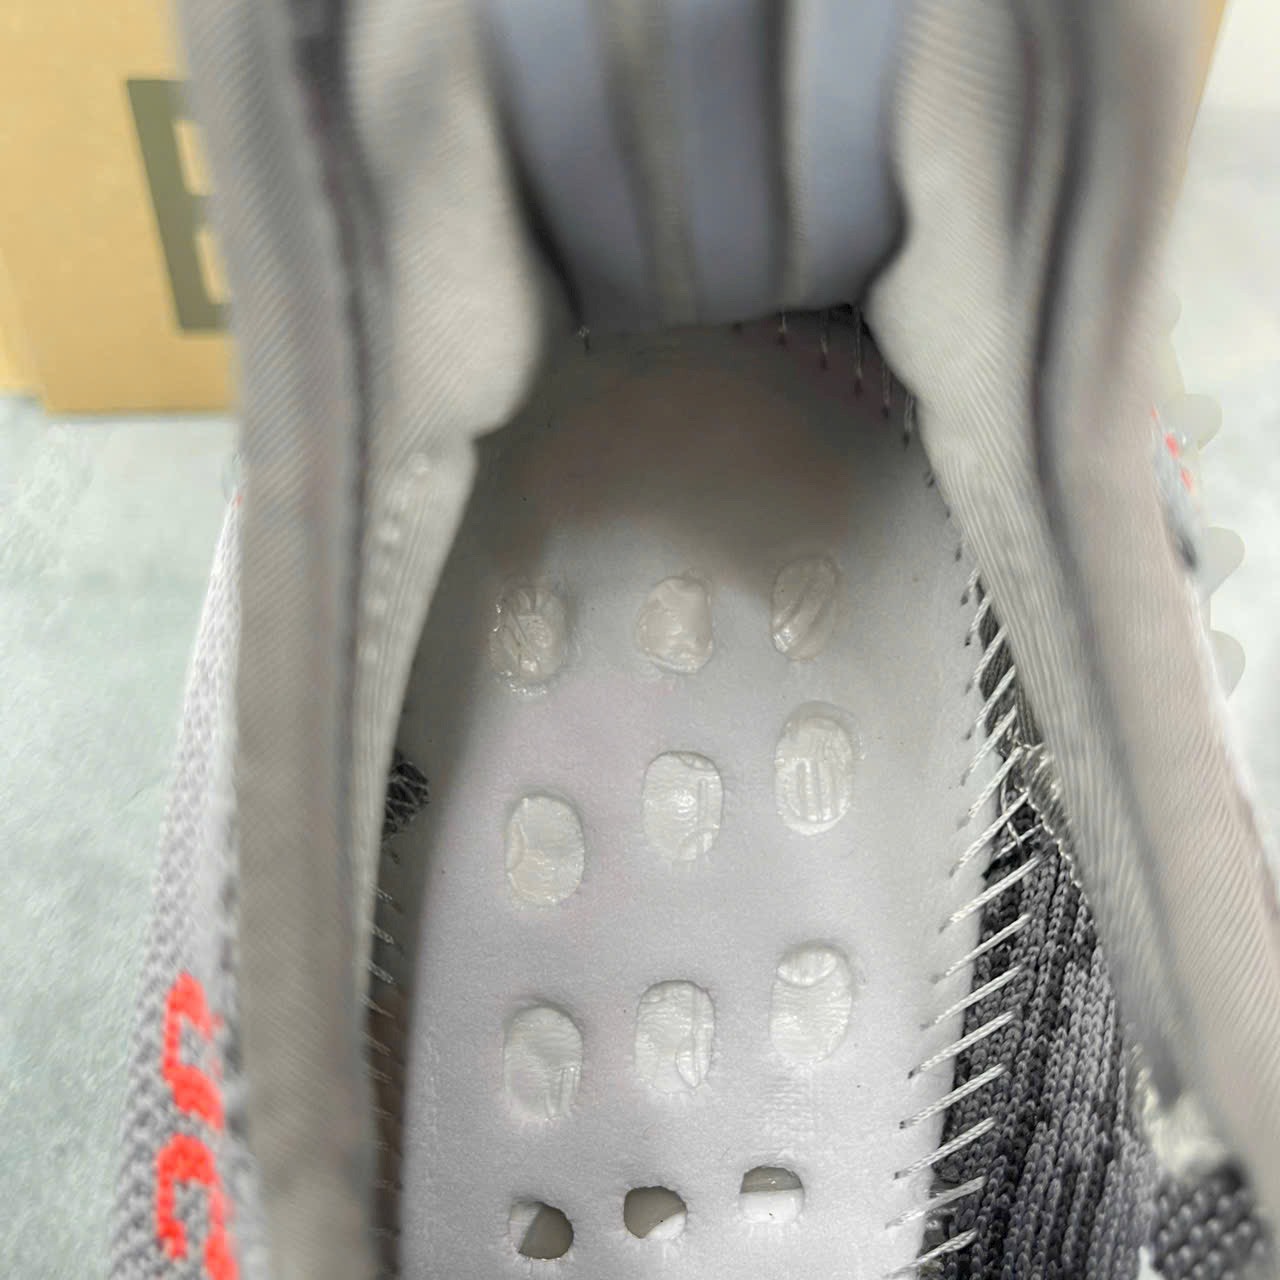 Giày Adidas Yeezy Boost 350 V2 Beluga 2.0 Best Quality